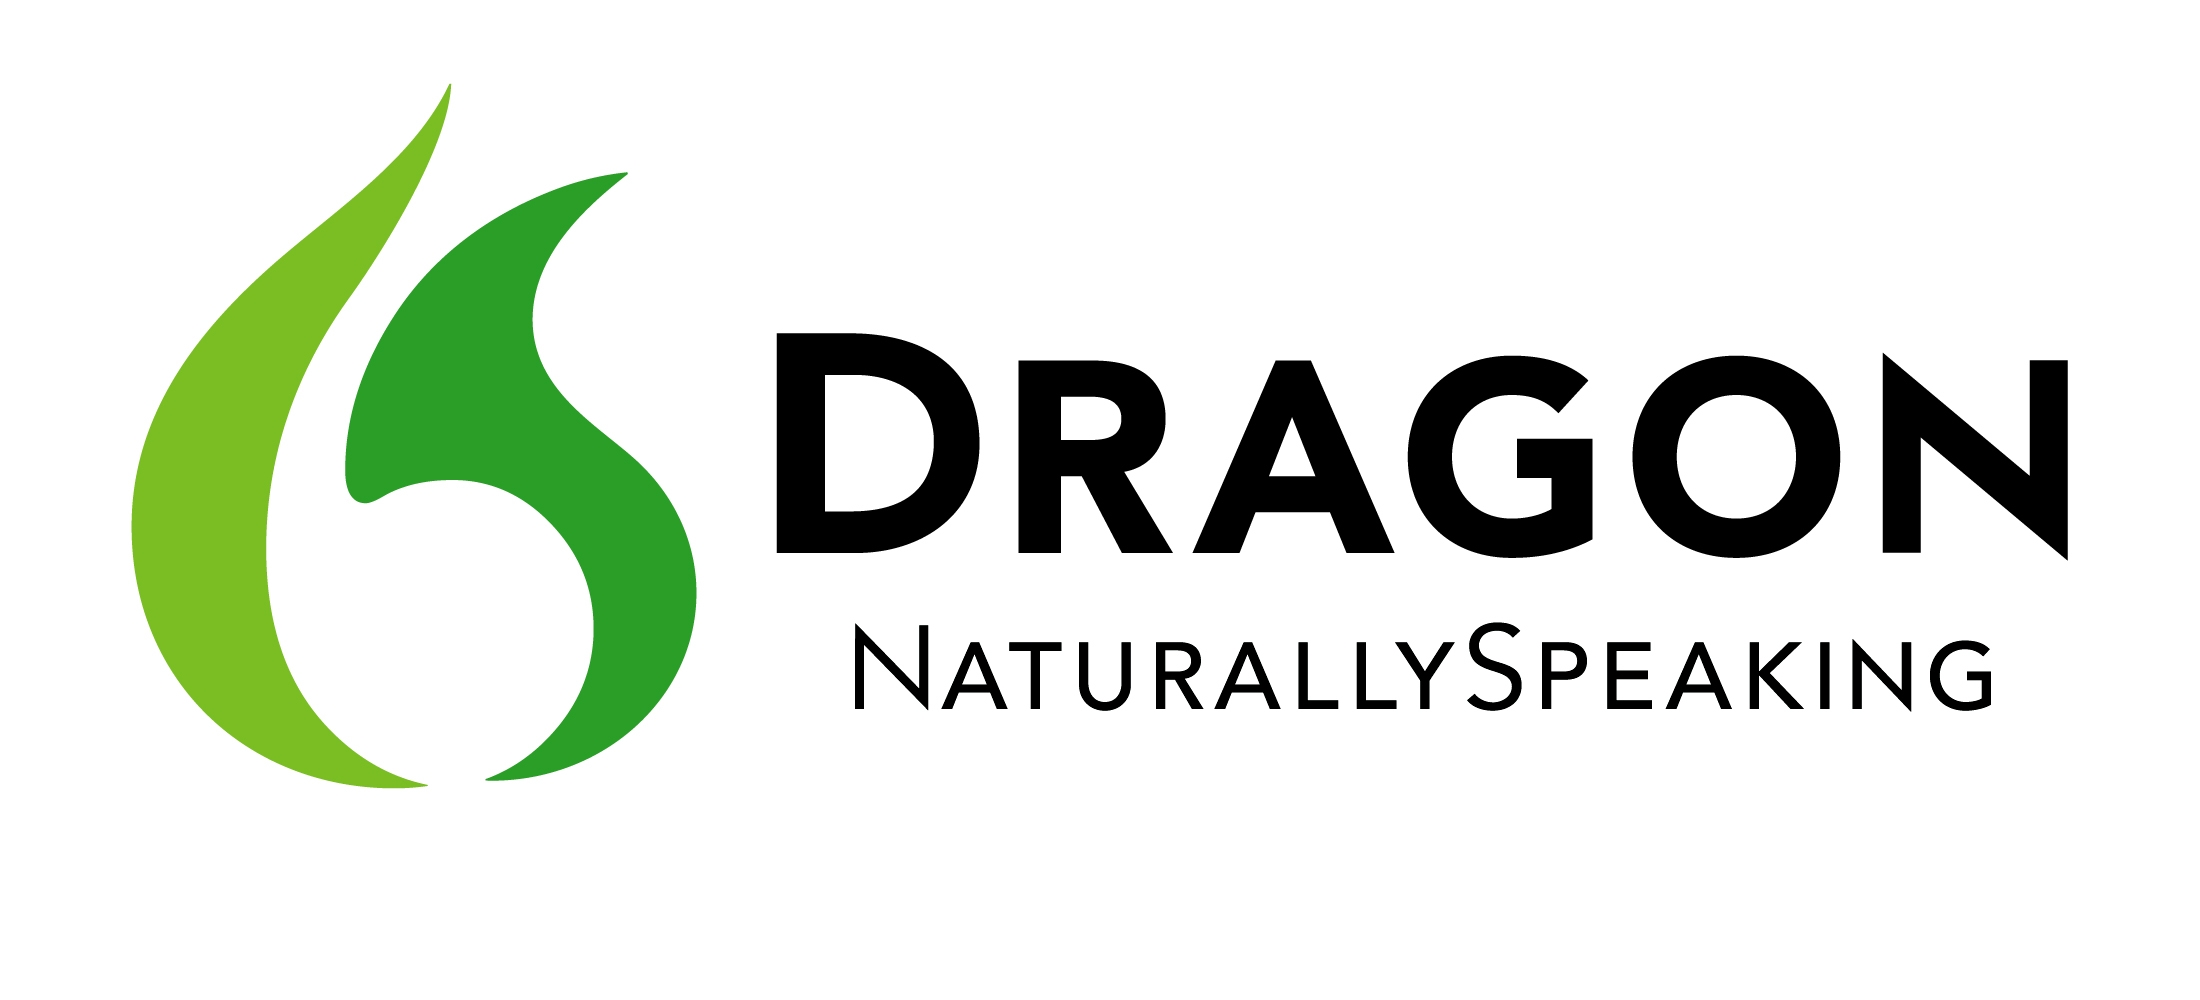 Dragon naturallyspeaking hkj